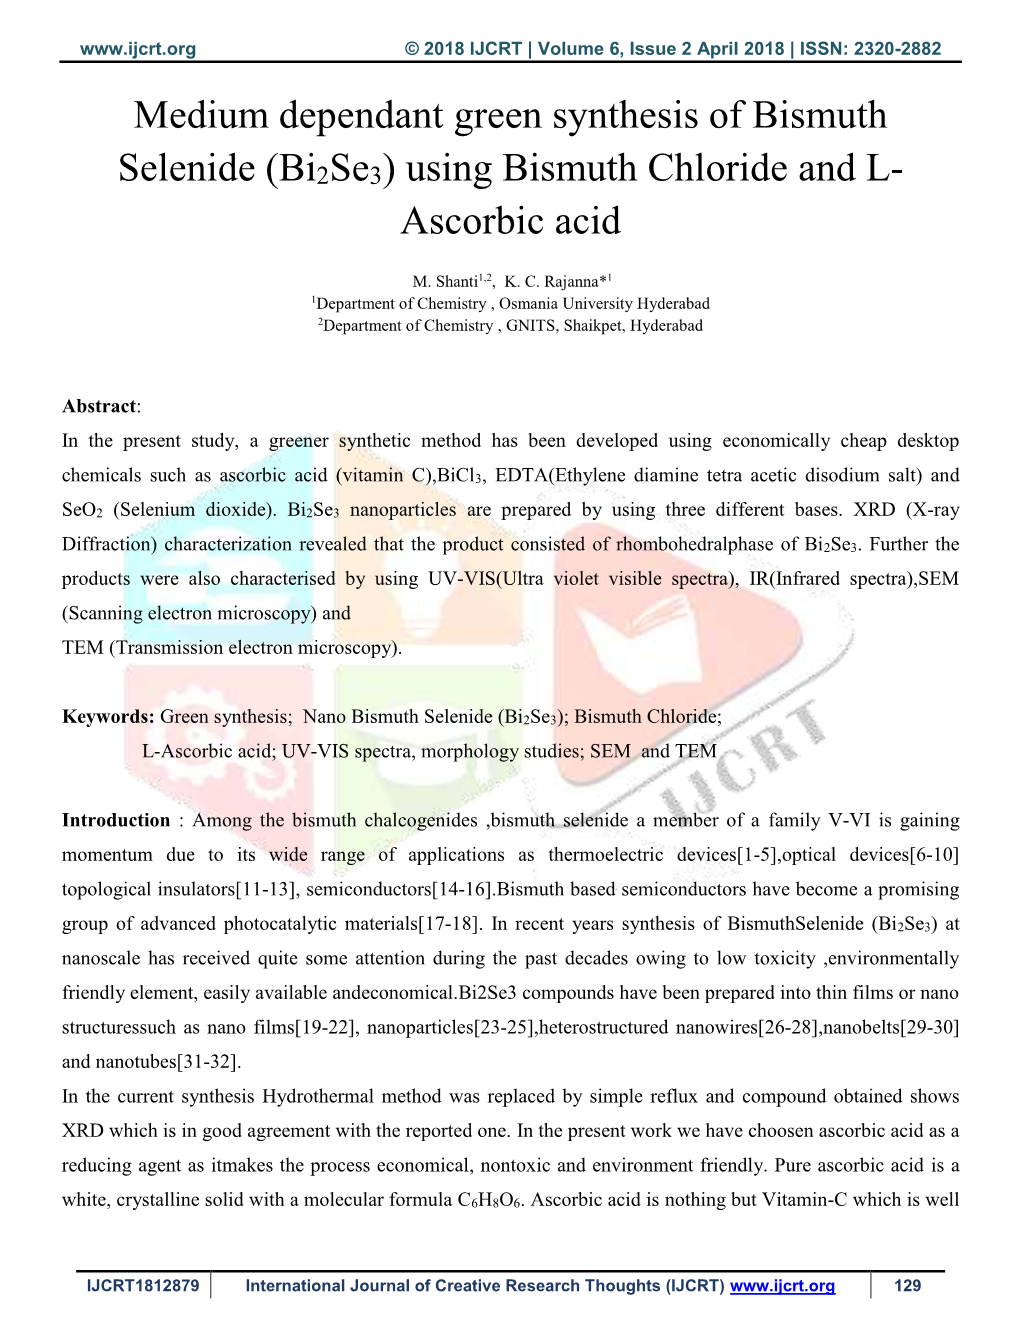 Medium Dependant Green Synthesis of Bismuth Selenide (Bi2se3)